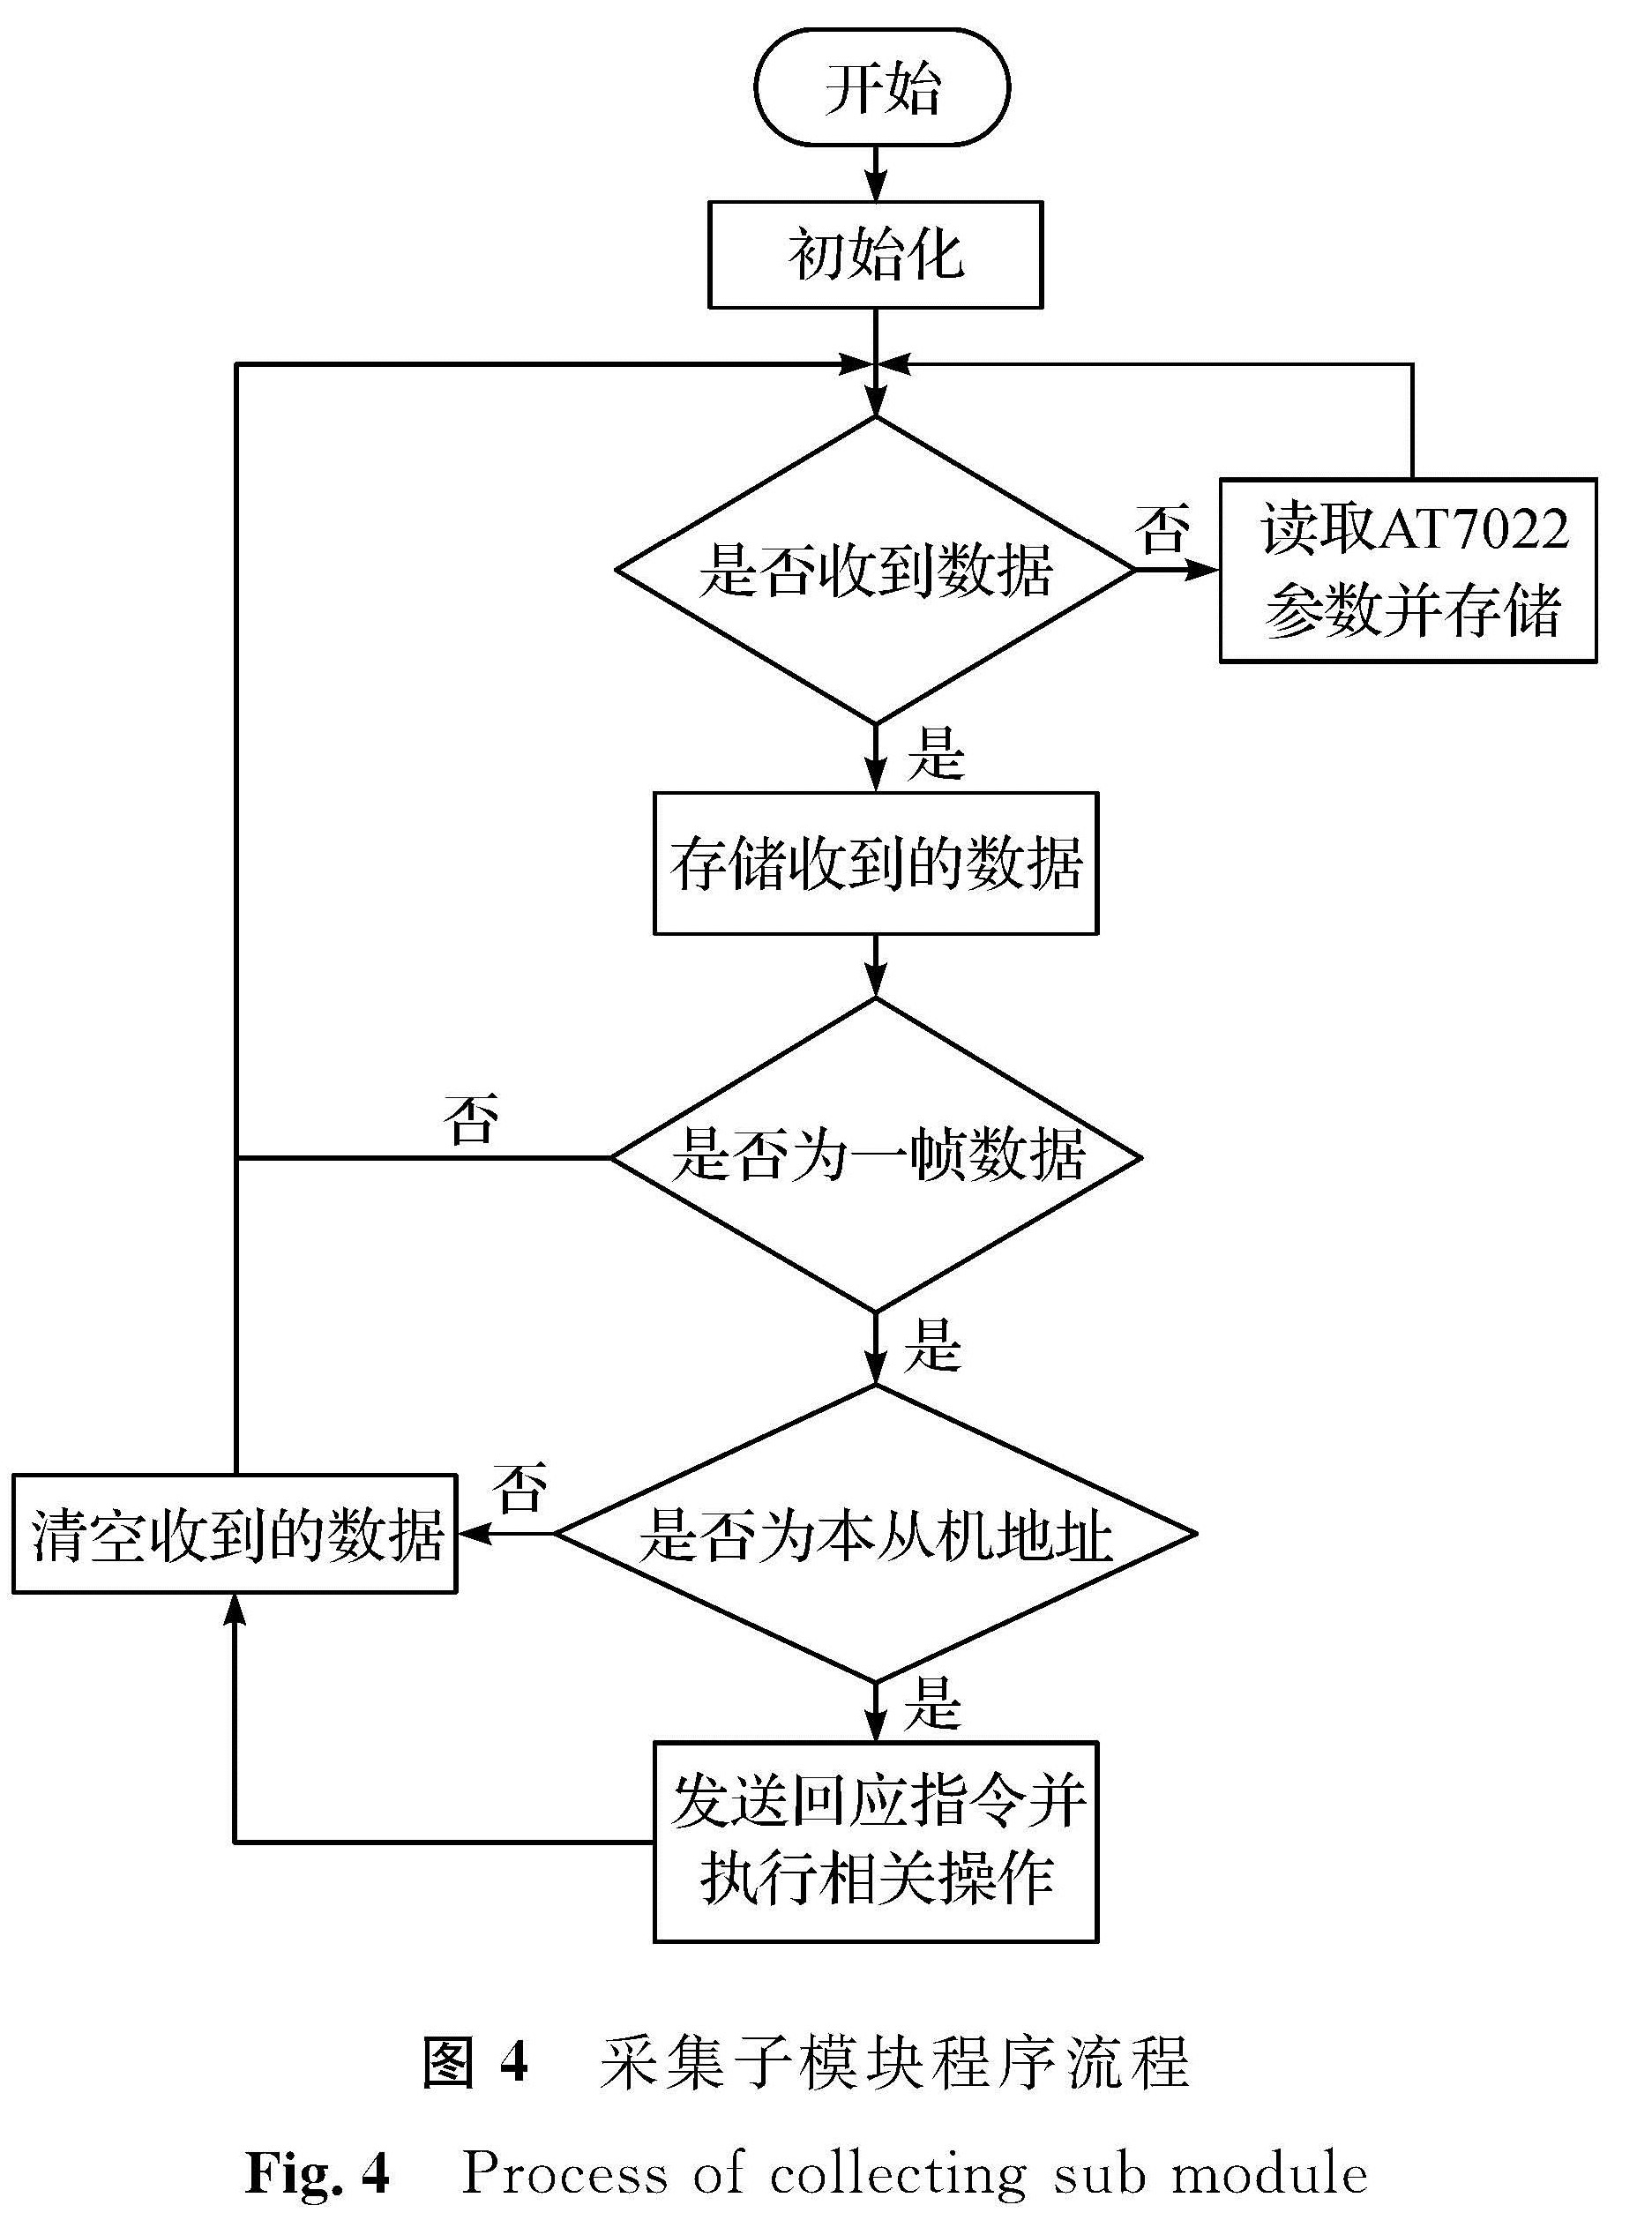 图4 采集子模块程序流程<br/>Fig.4 Process of collecting sub module